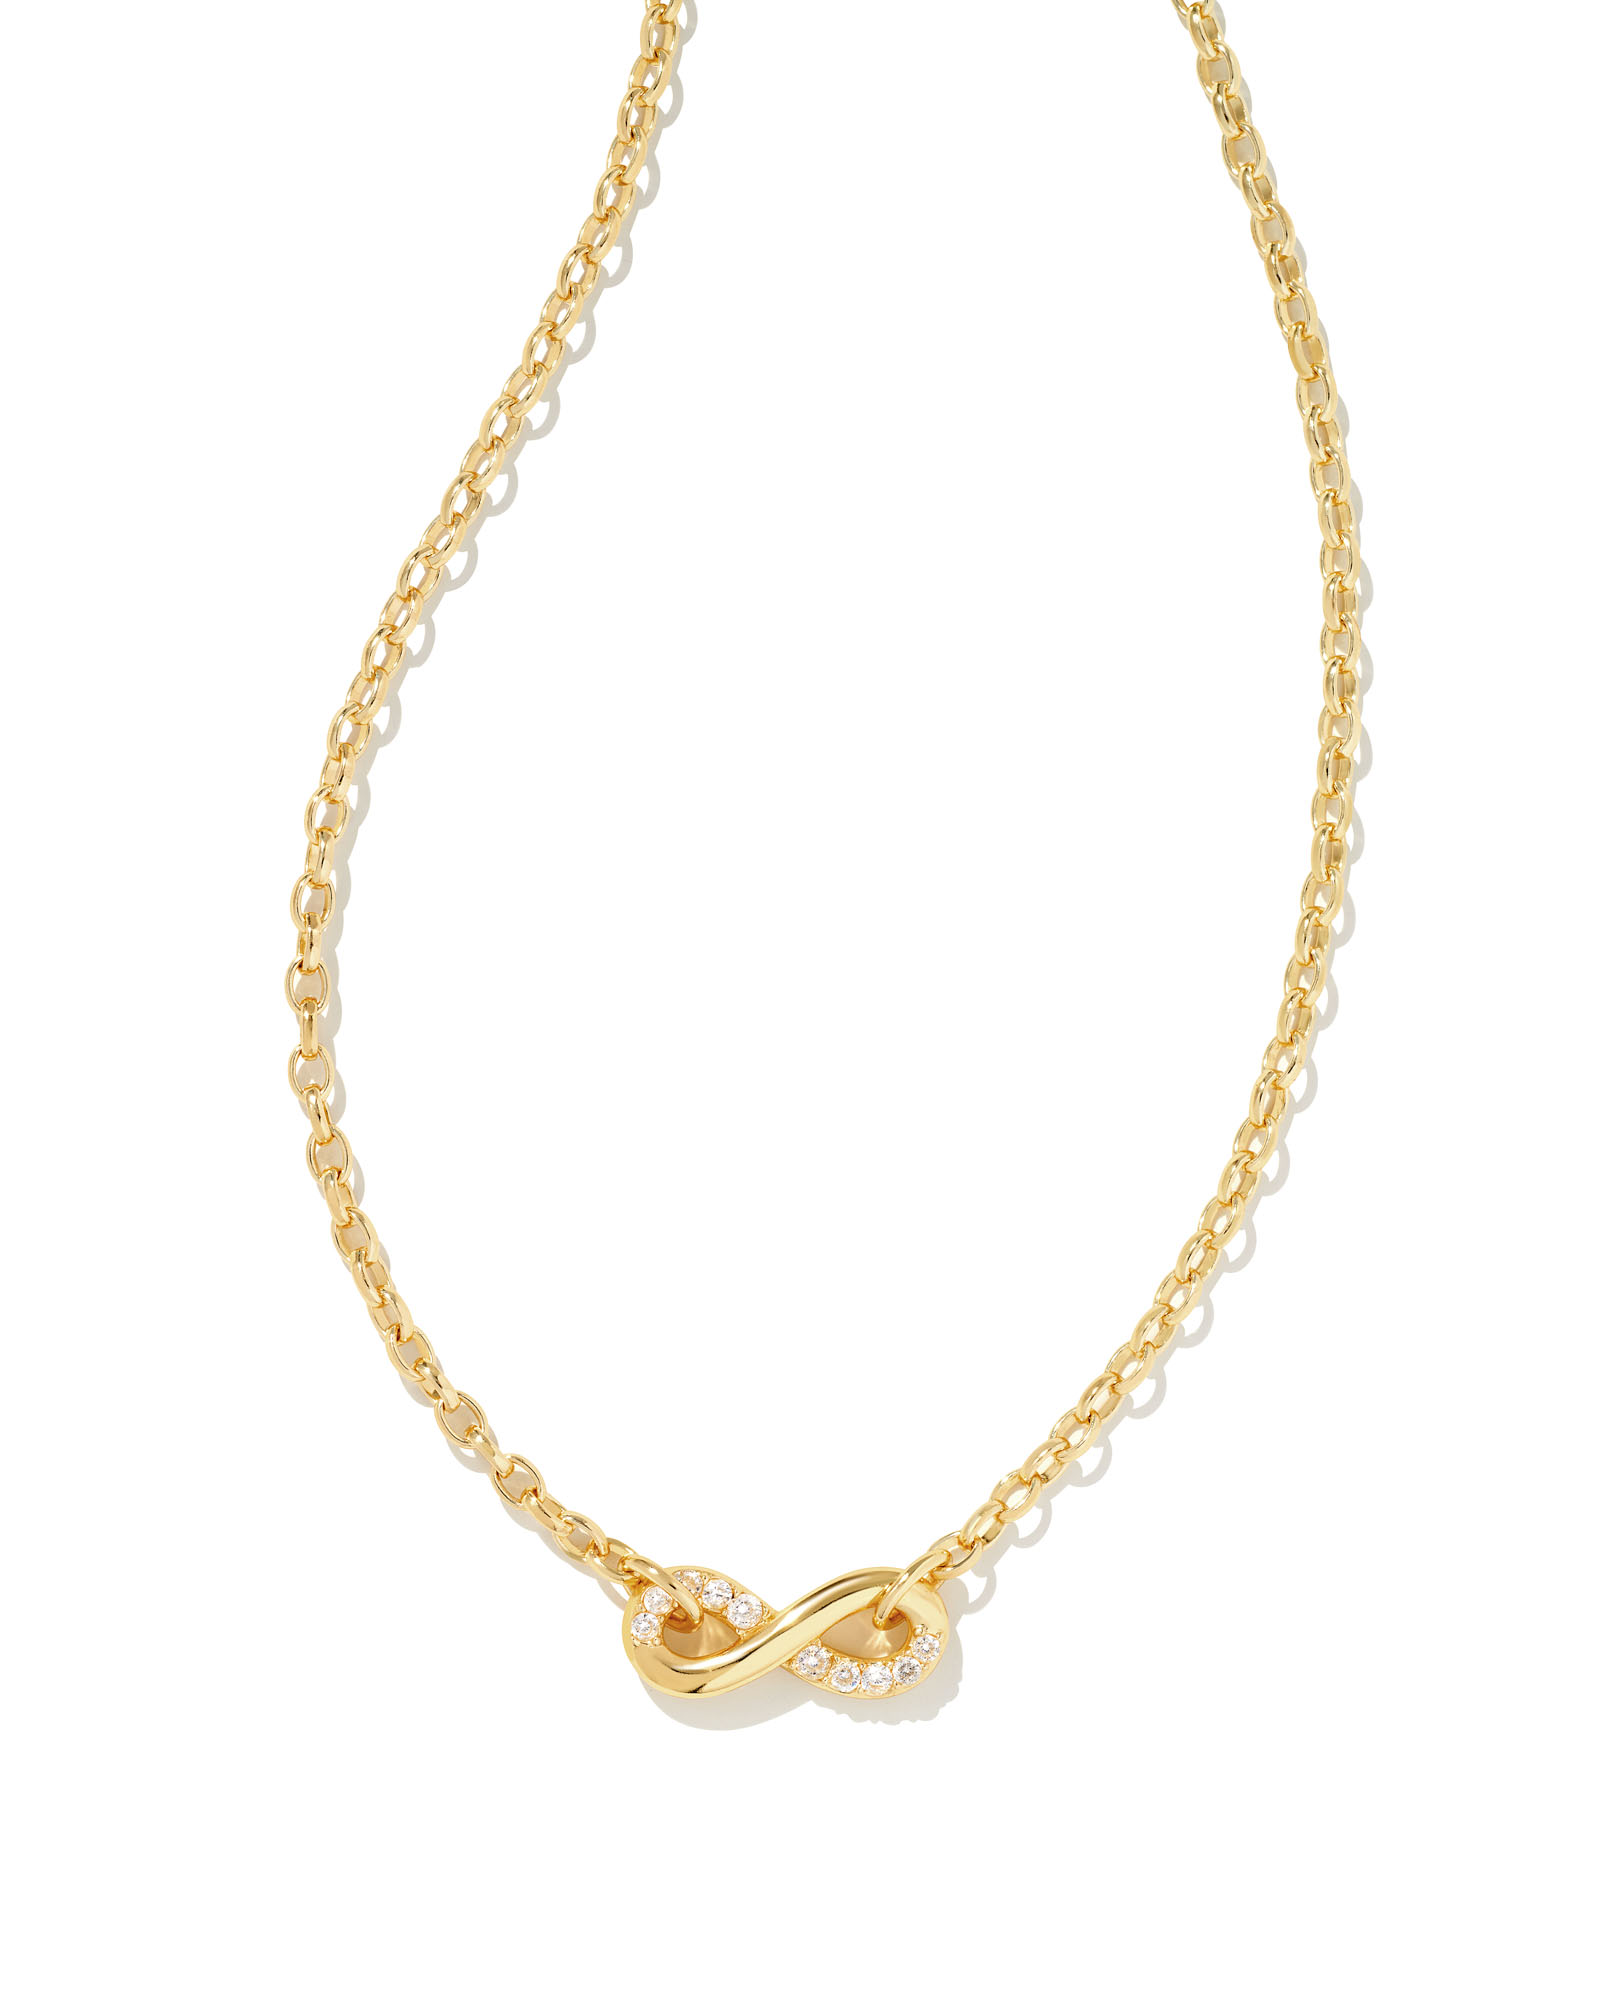 Elisa Gold Pendant Necklace in Azalea Illusion | Kendra Scott | Necklace,  Short pendant necklace, Kendra scott necklace